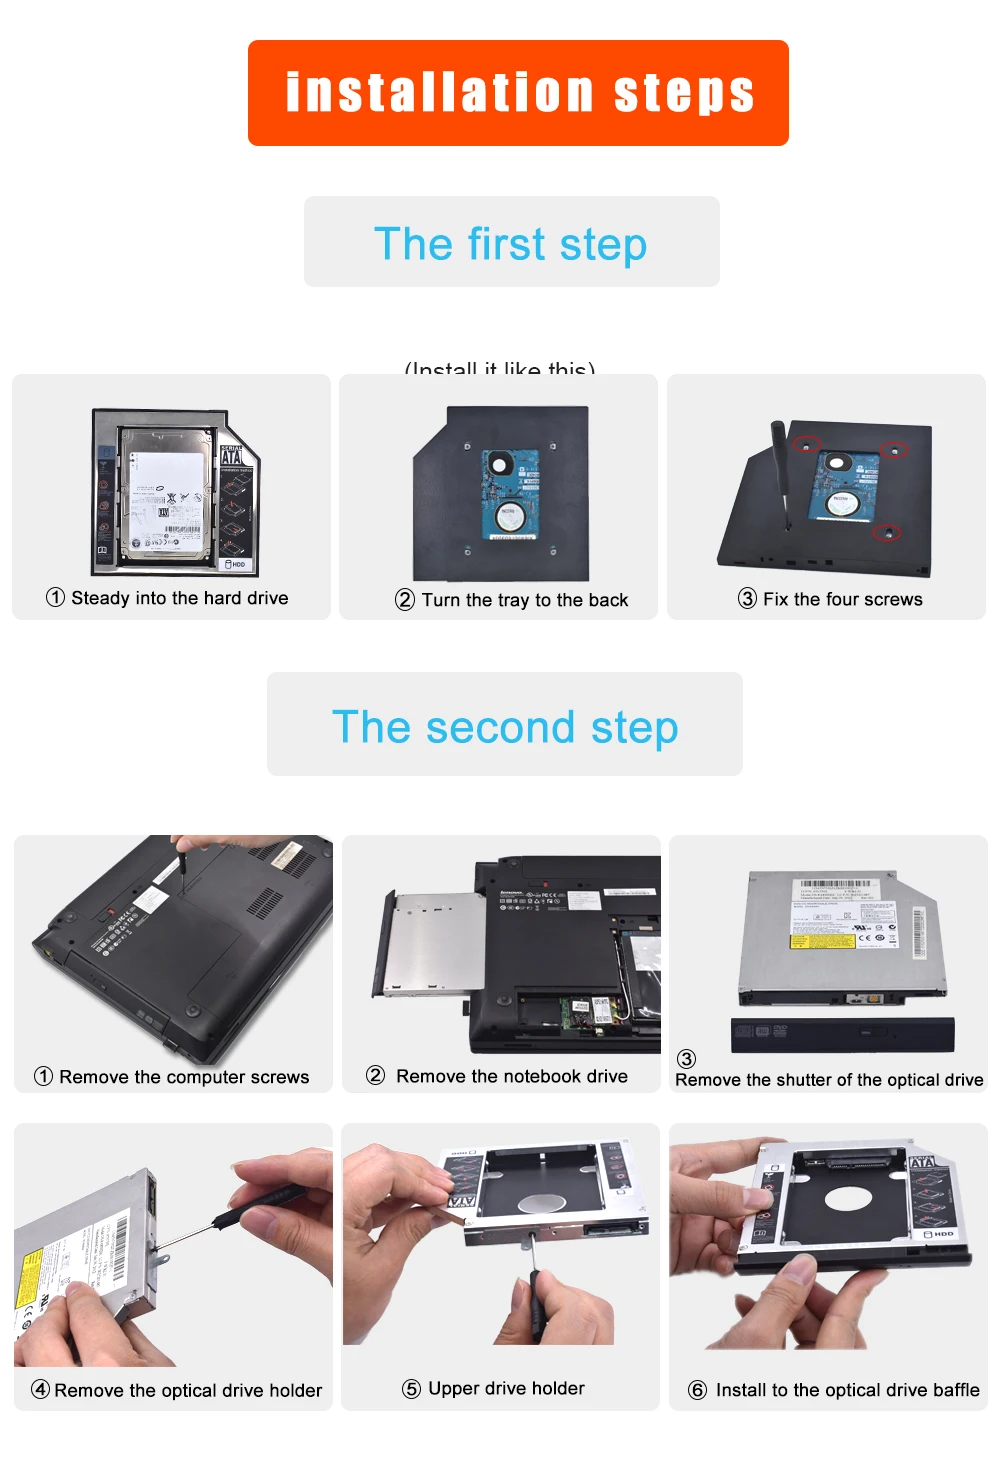 TISHRIC алюминий+ пластик Универсальный 2nd HDD Caddy 9,5 мм SATA 3,0 2," SSD чехол Корпус жесткого диска ODD Оптический отсек